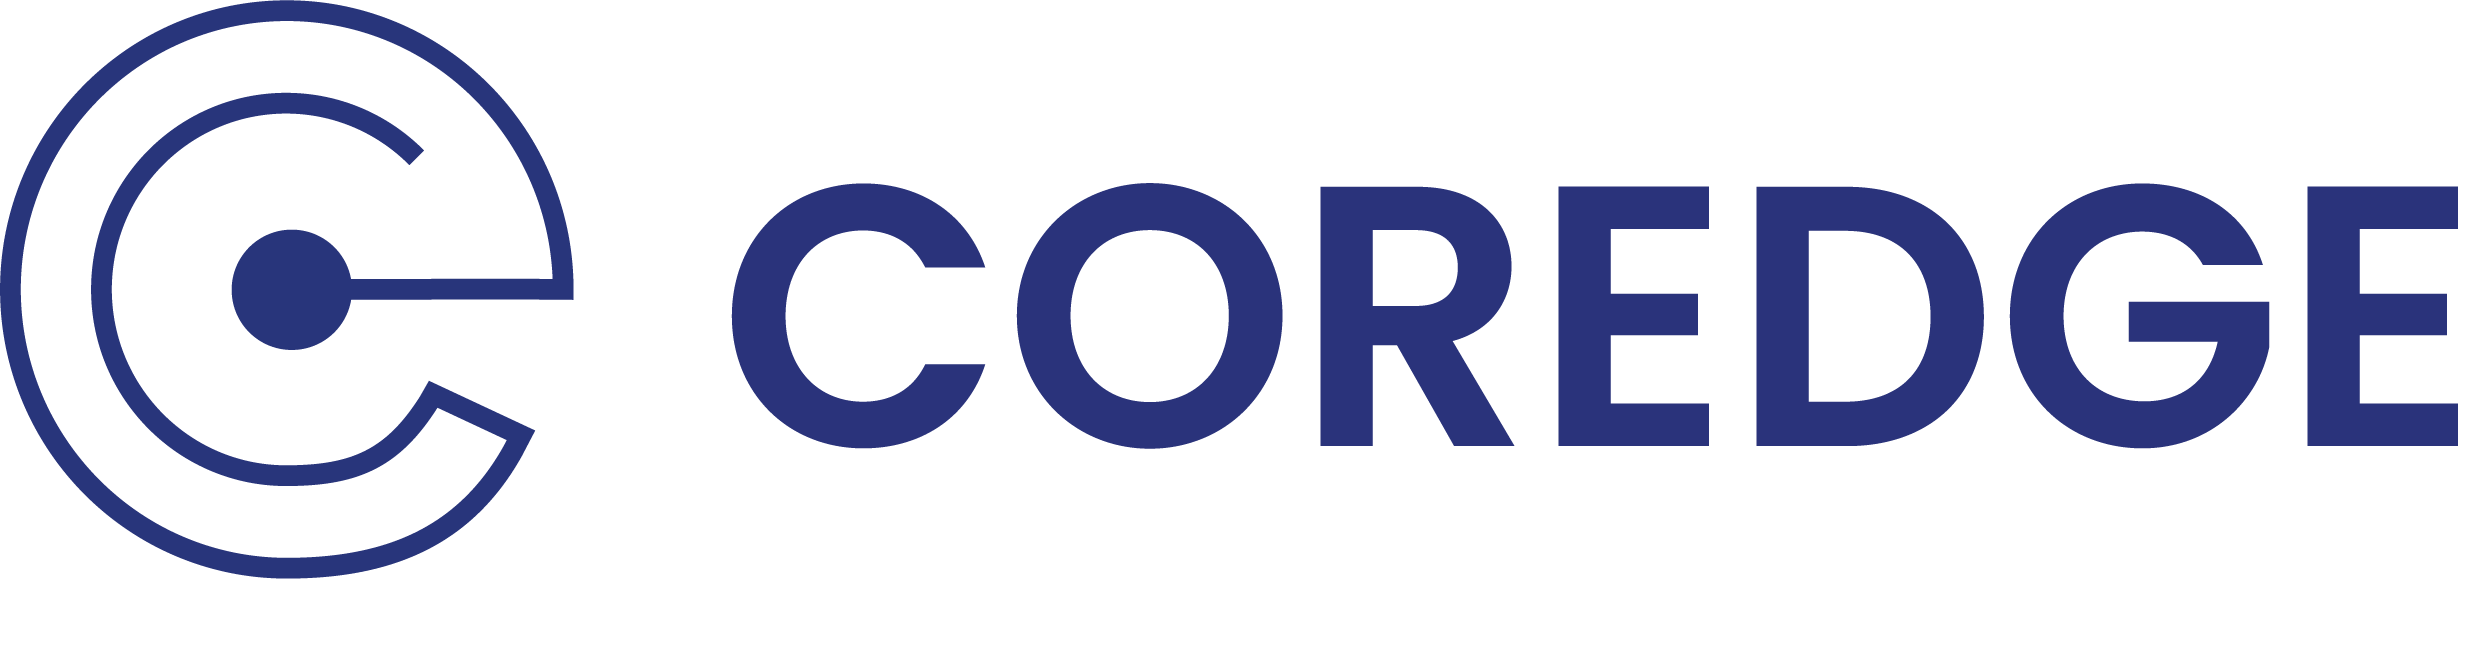 Coredge Logo